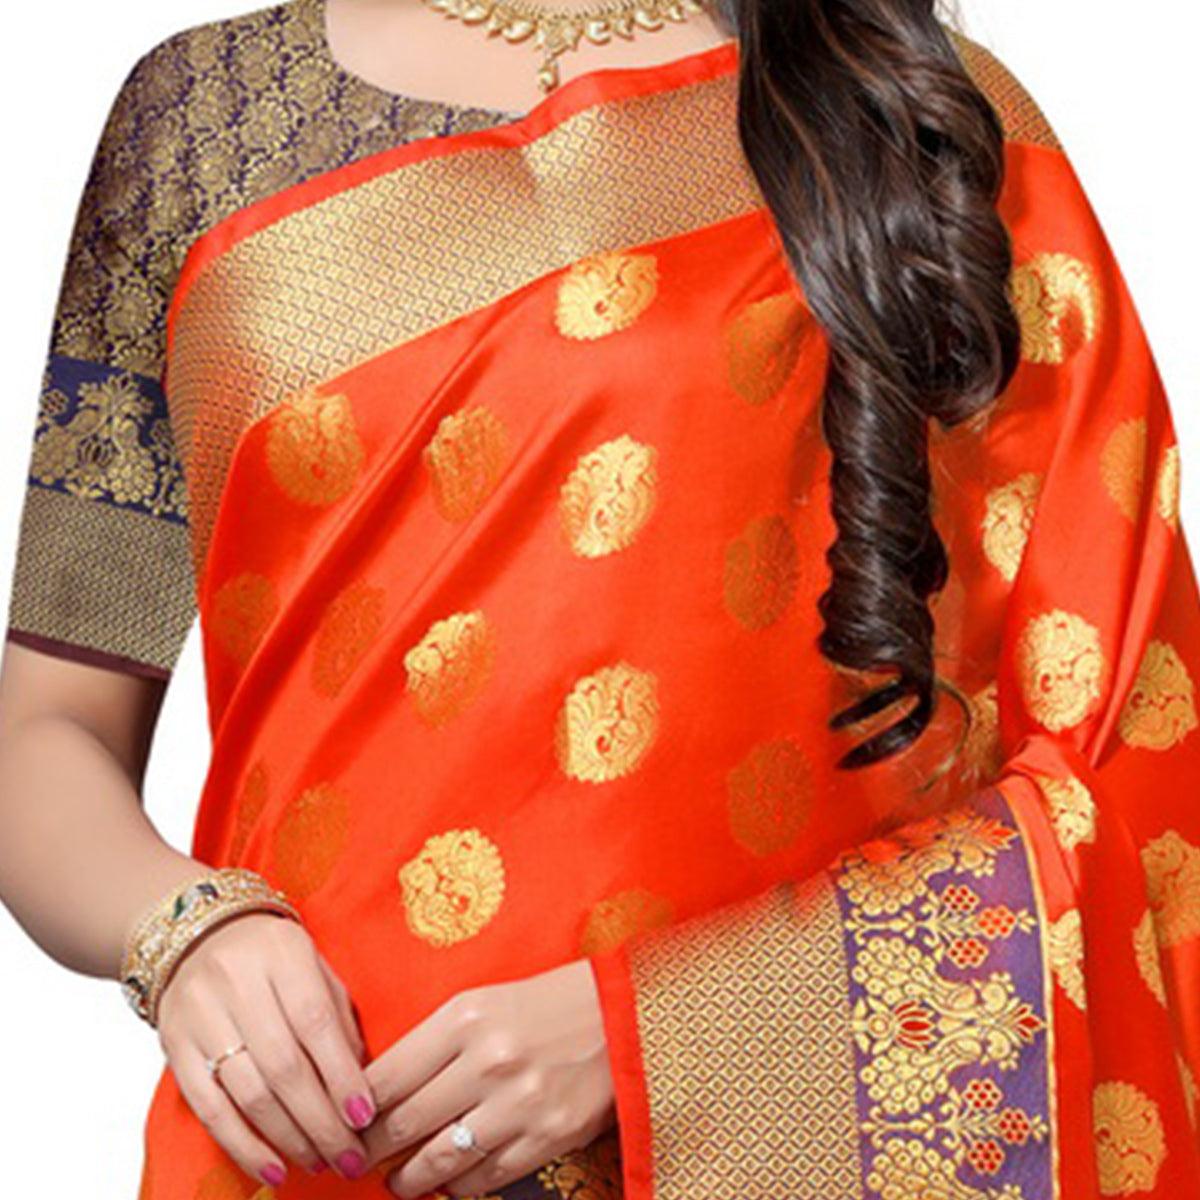 Surpassing Orange Colored Festive Wear Woven Kota Art Silk Banarasi Saree - Peachmode